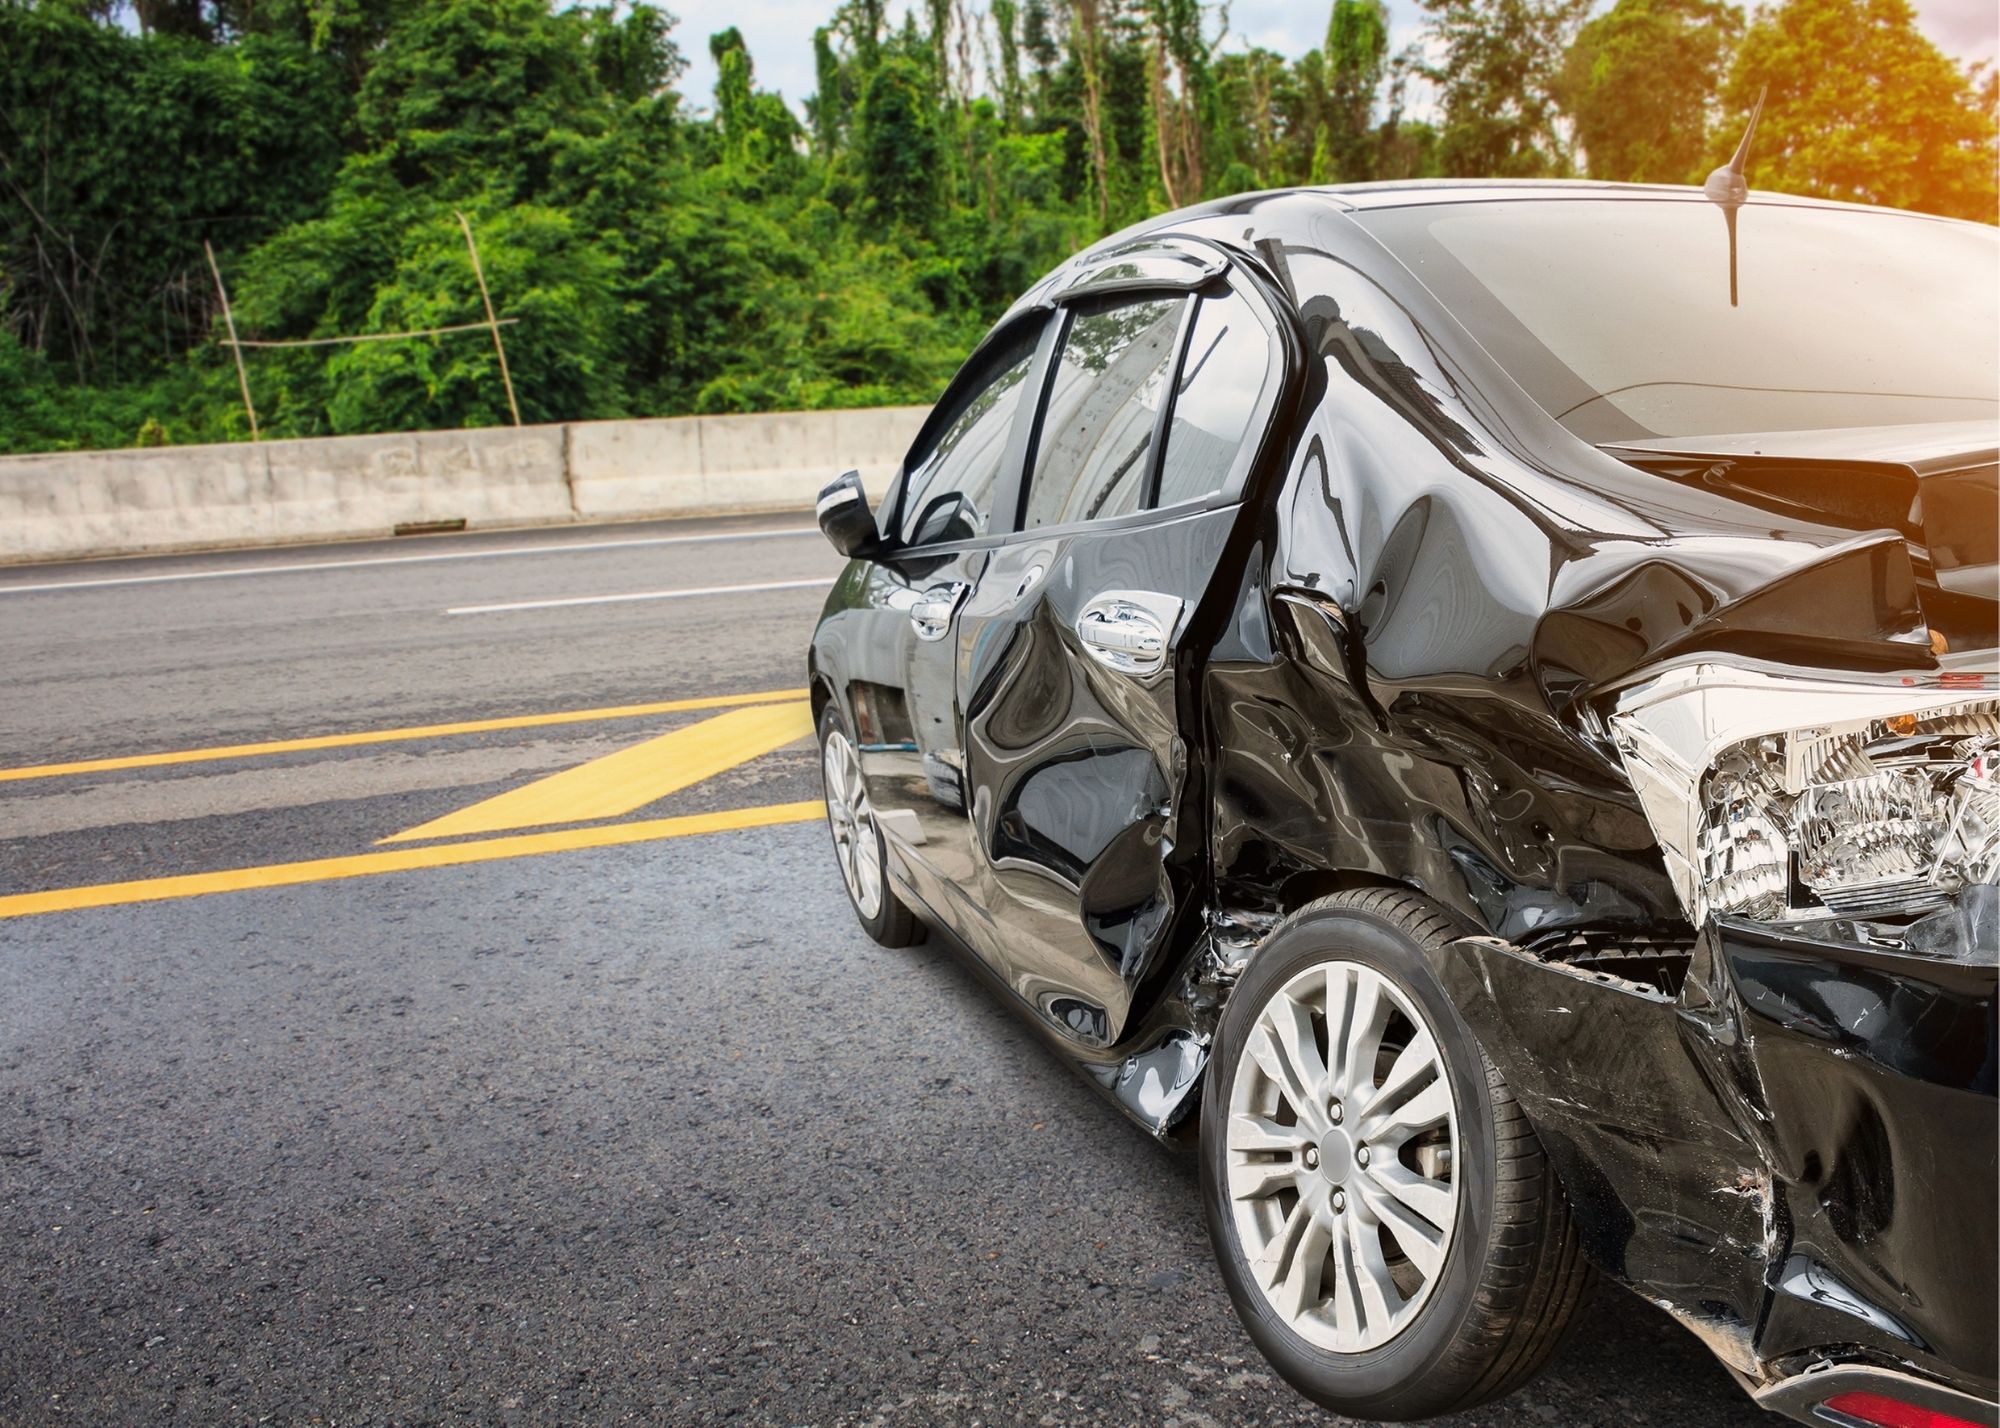 SR Drivers Insurance Solutions of Cincinnati